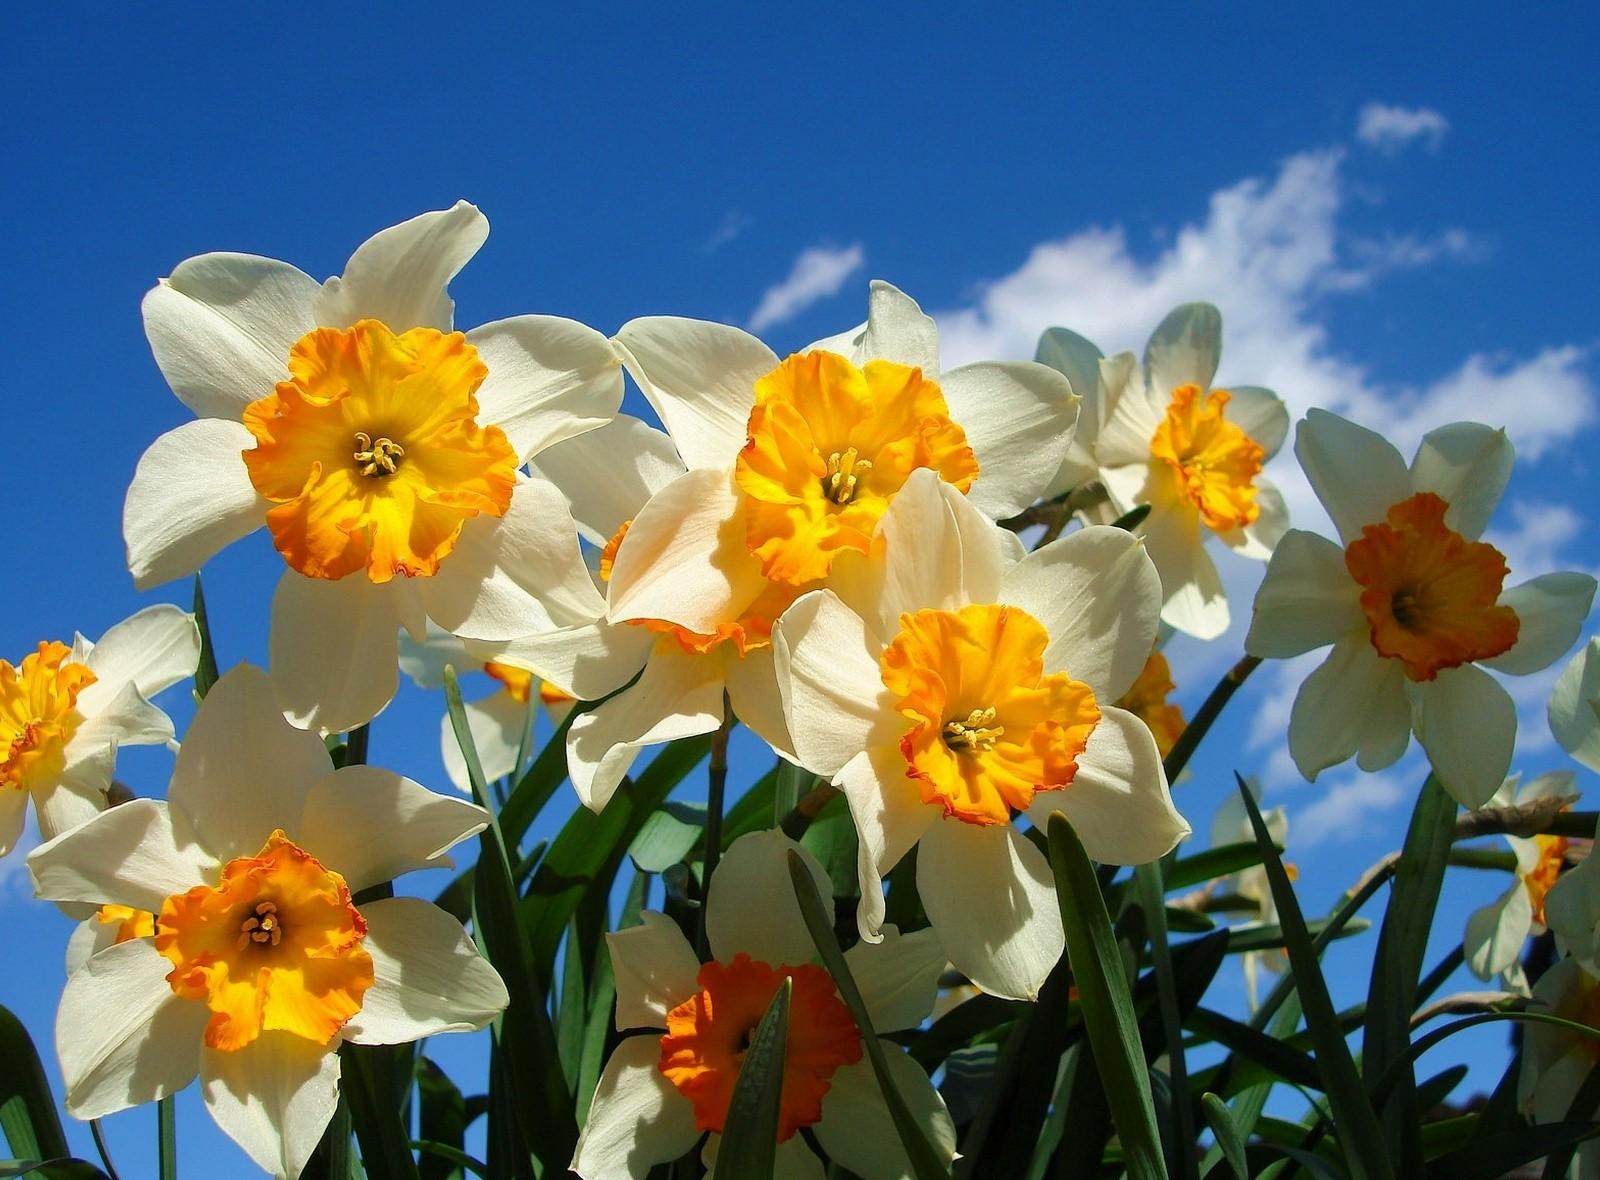 narcissussi, flowerbed, flowers, sky, flower bed, spring, sunny